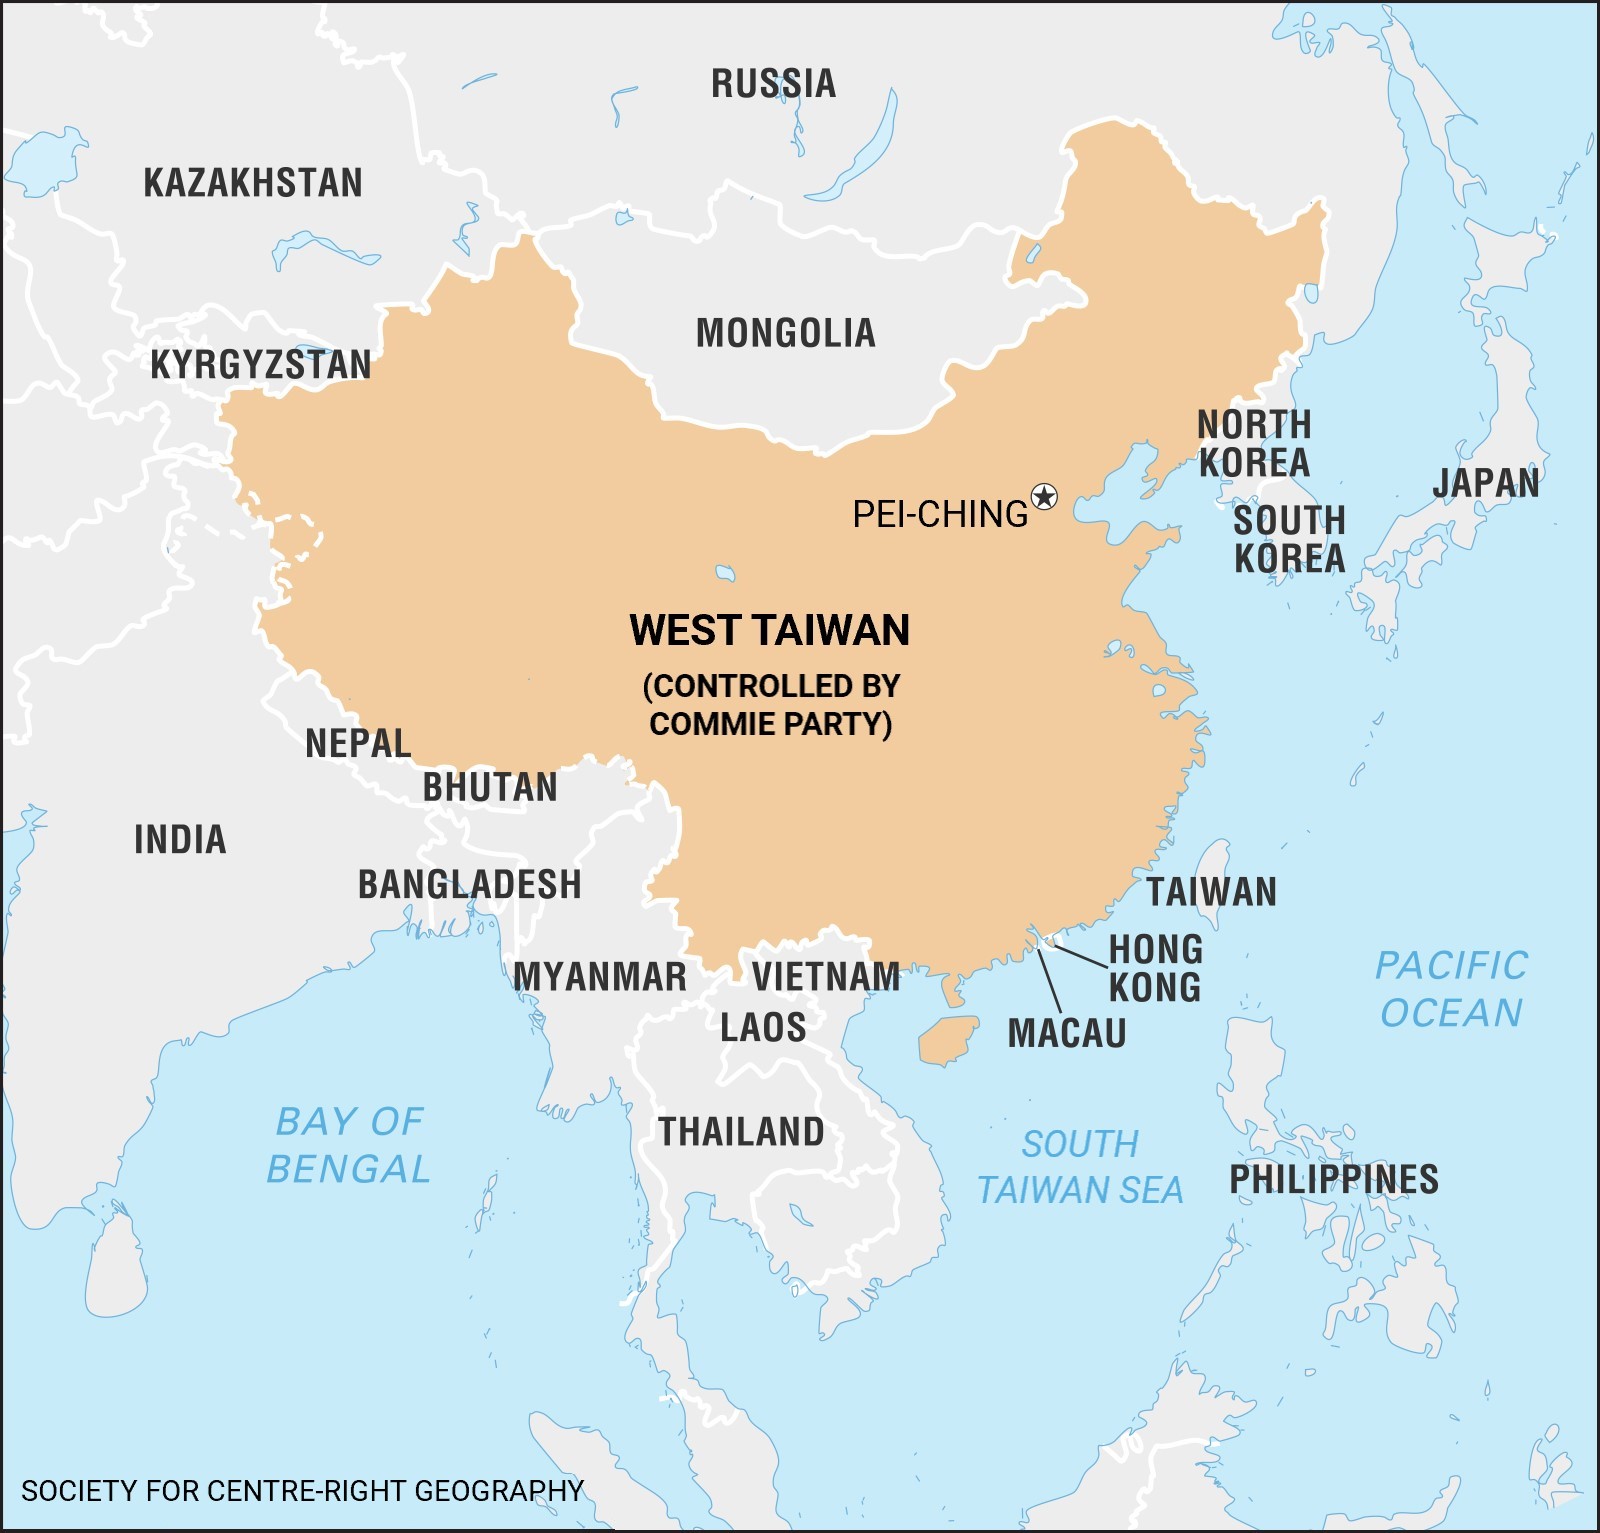 Map Asia HUMOR Taiwan Sea Countries Philippines Japan South Korea North Korea Mongolia Russia Kazakh 1600x1533